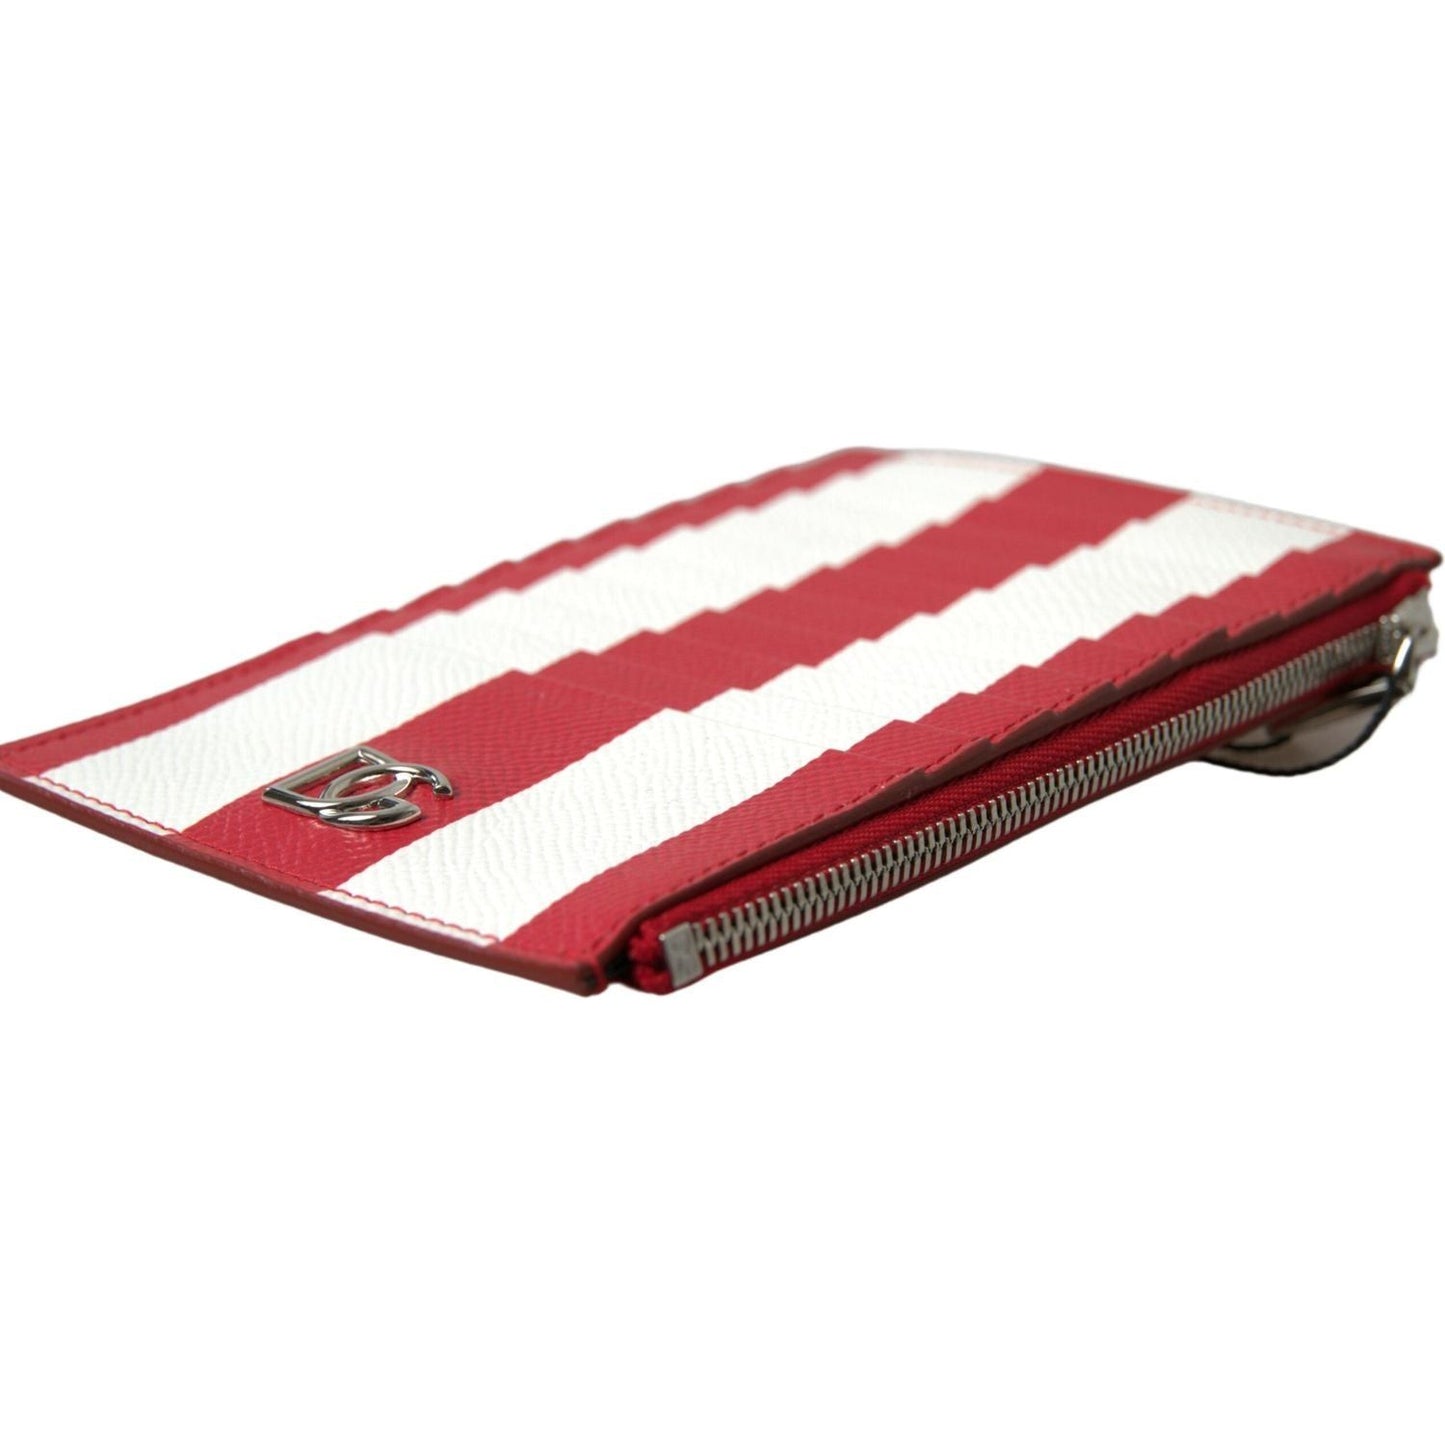 Dolce & Gabbana Elegant Striped Leather Card Holder red-white-leather-dg-logo-zip-card-holder-wallet